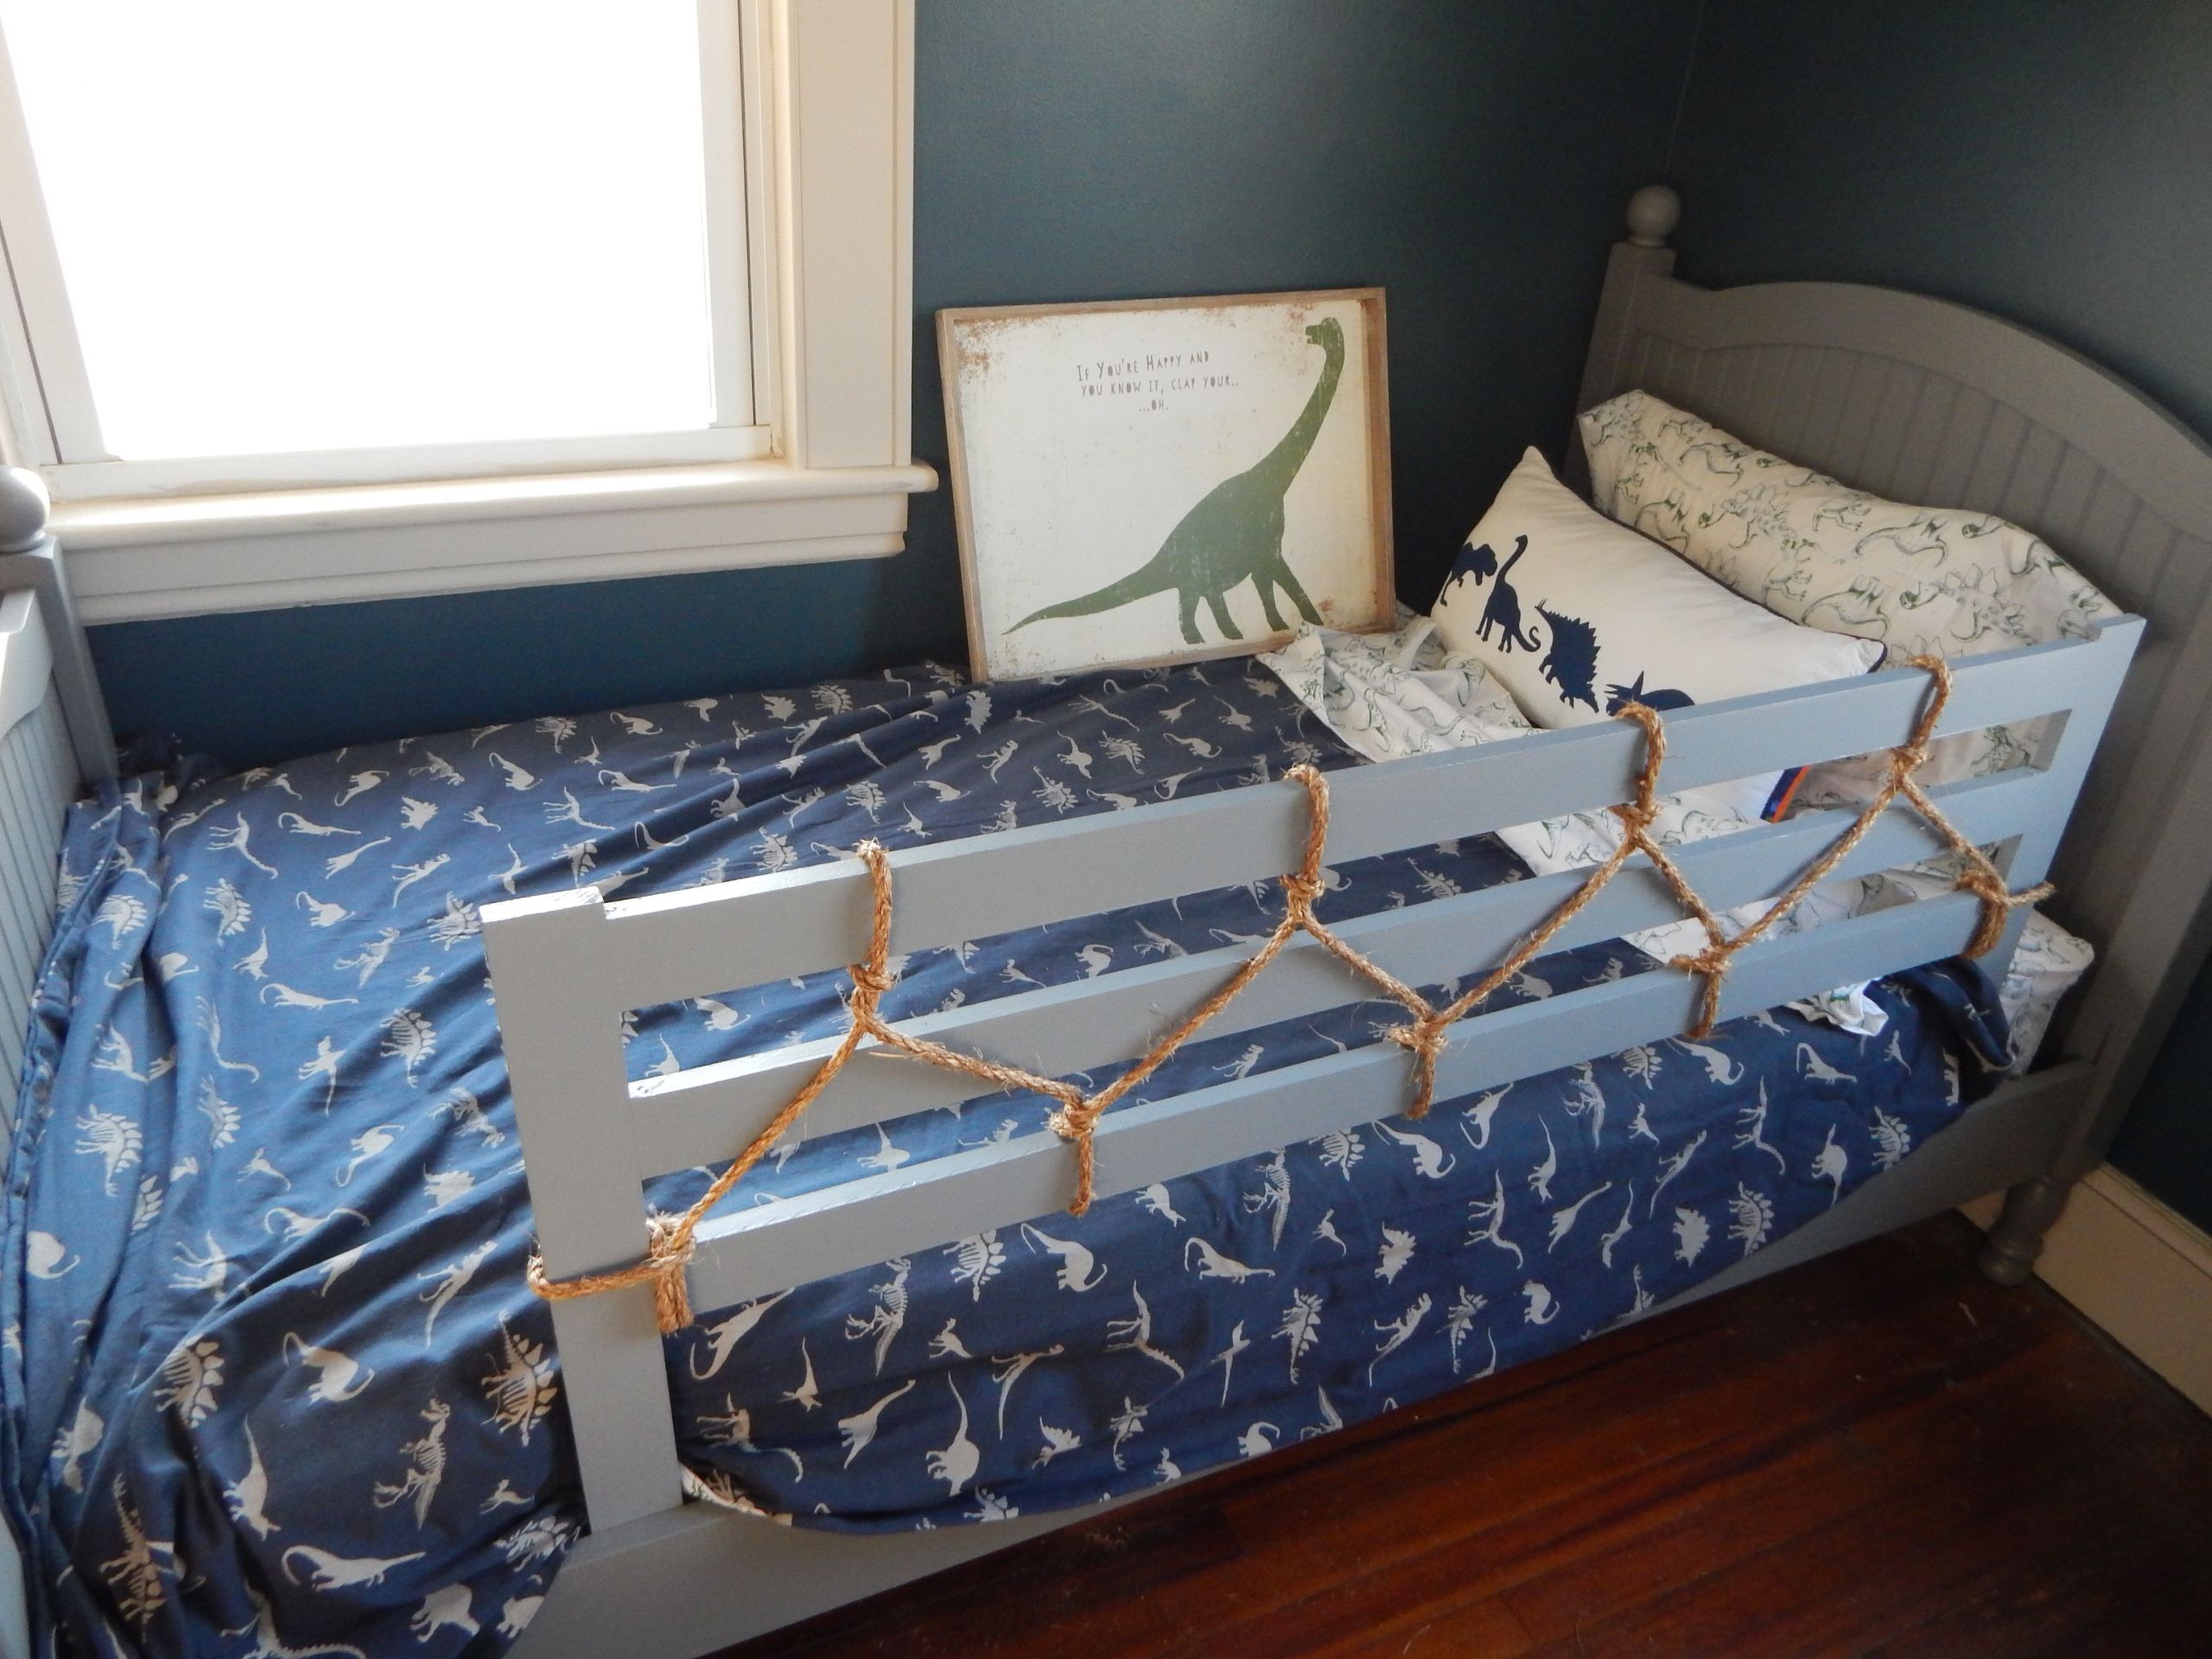 DIY Bed Rail For Toddler
 Toddler Bed Rail – a little diy 